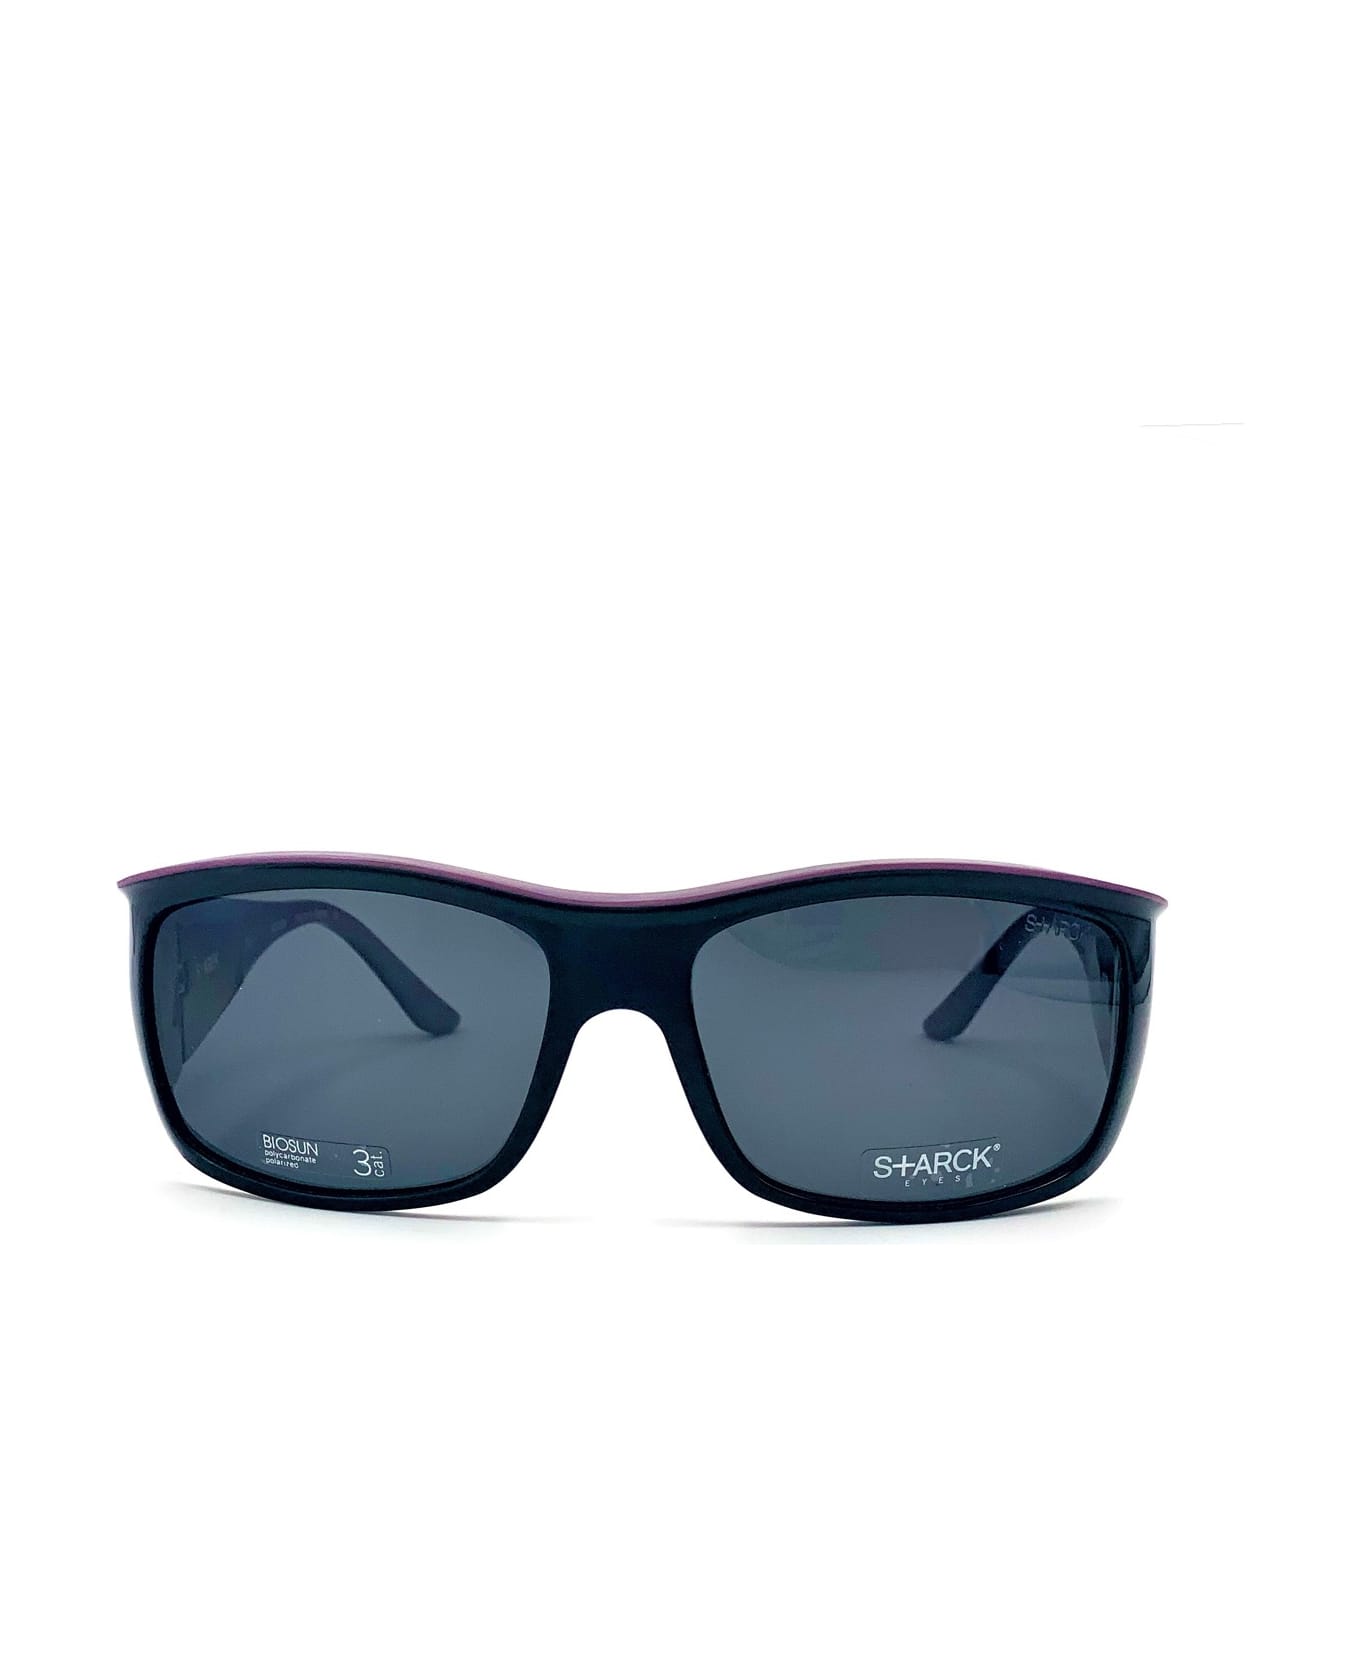 Philippe Starck Pl 1088 Sunglasses - Nero